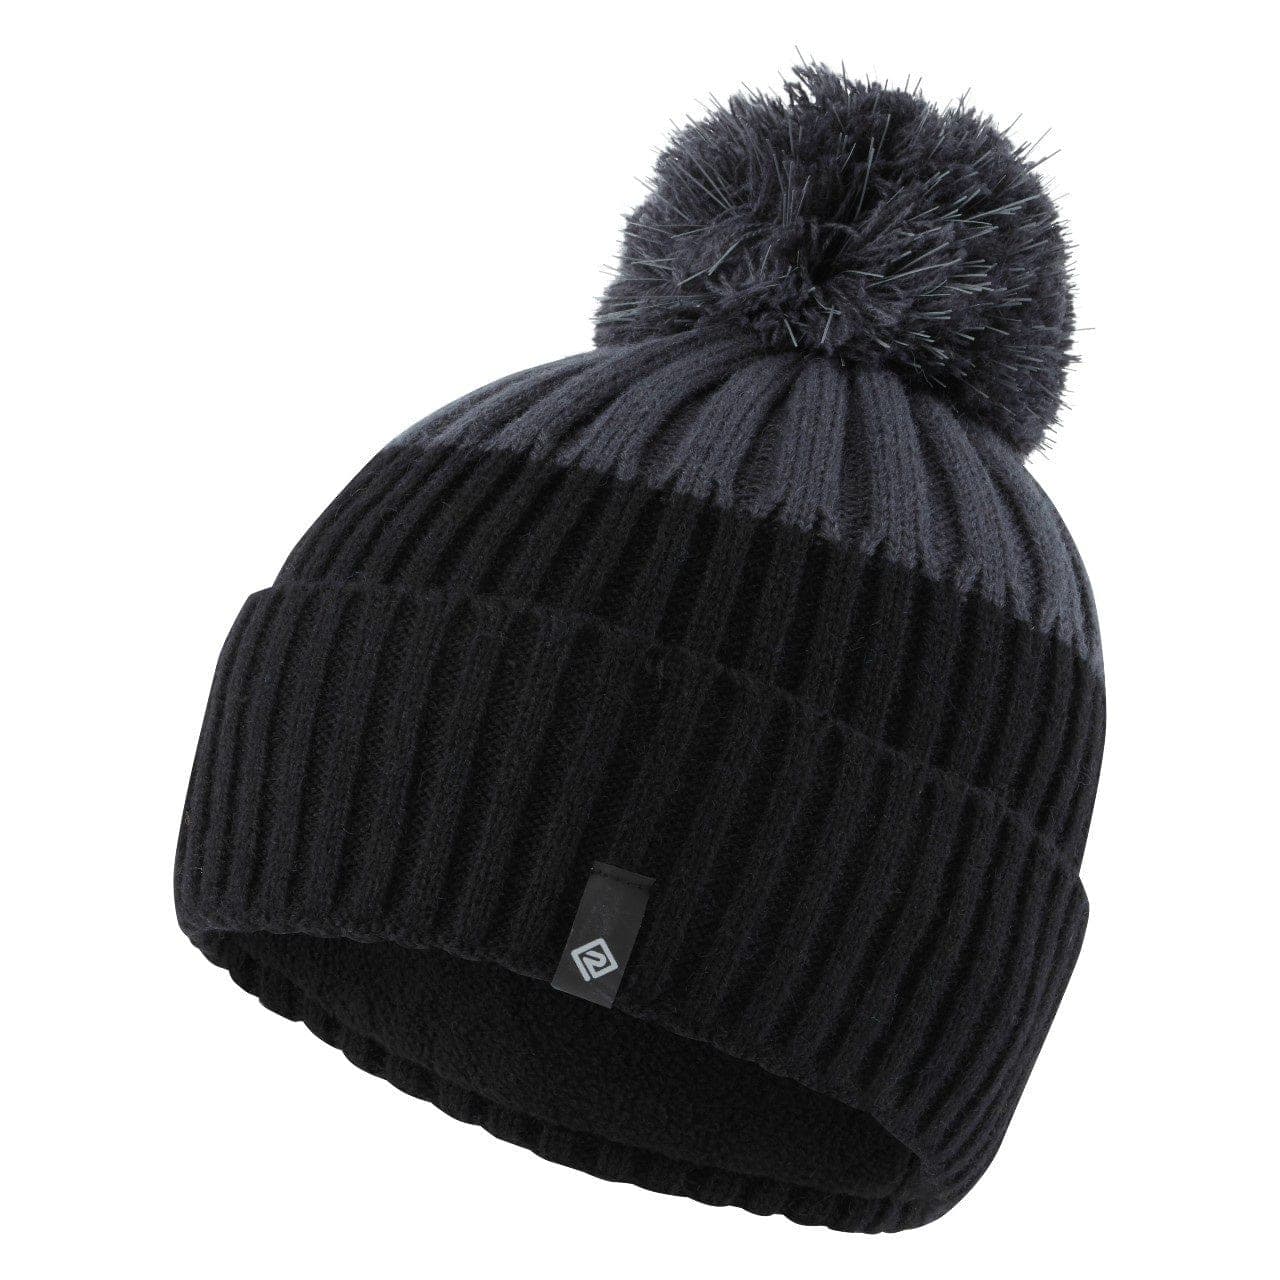 Ronhill Bobble Hat - Charcoal/Black